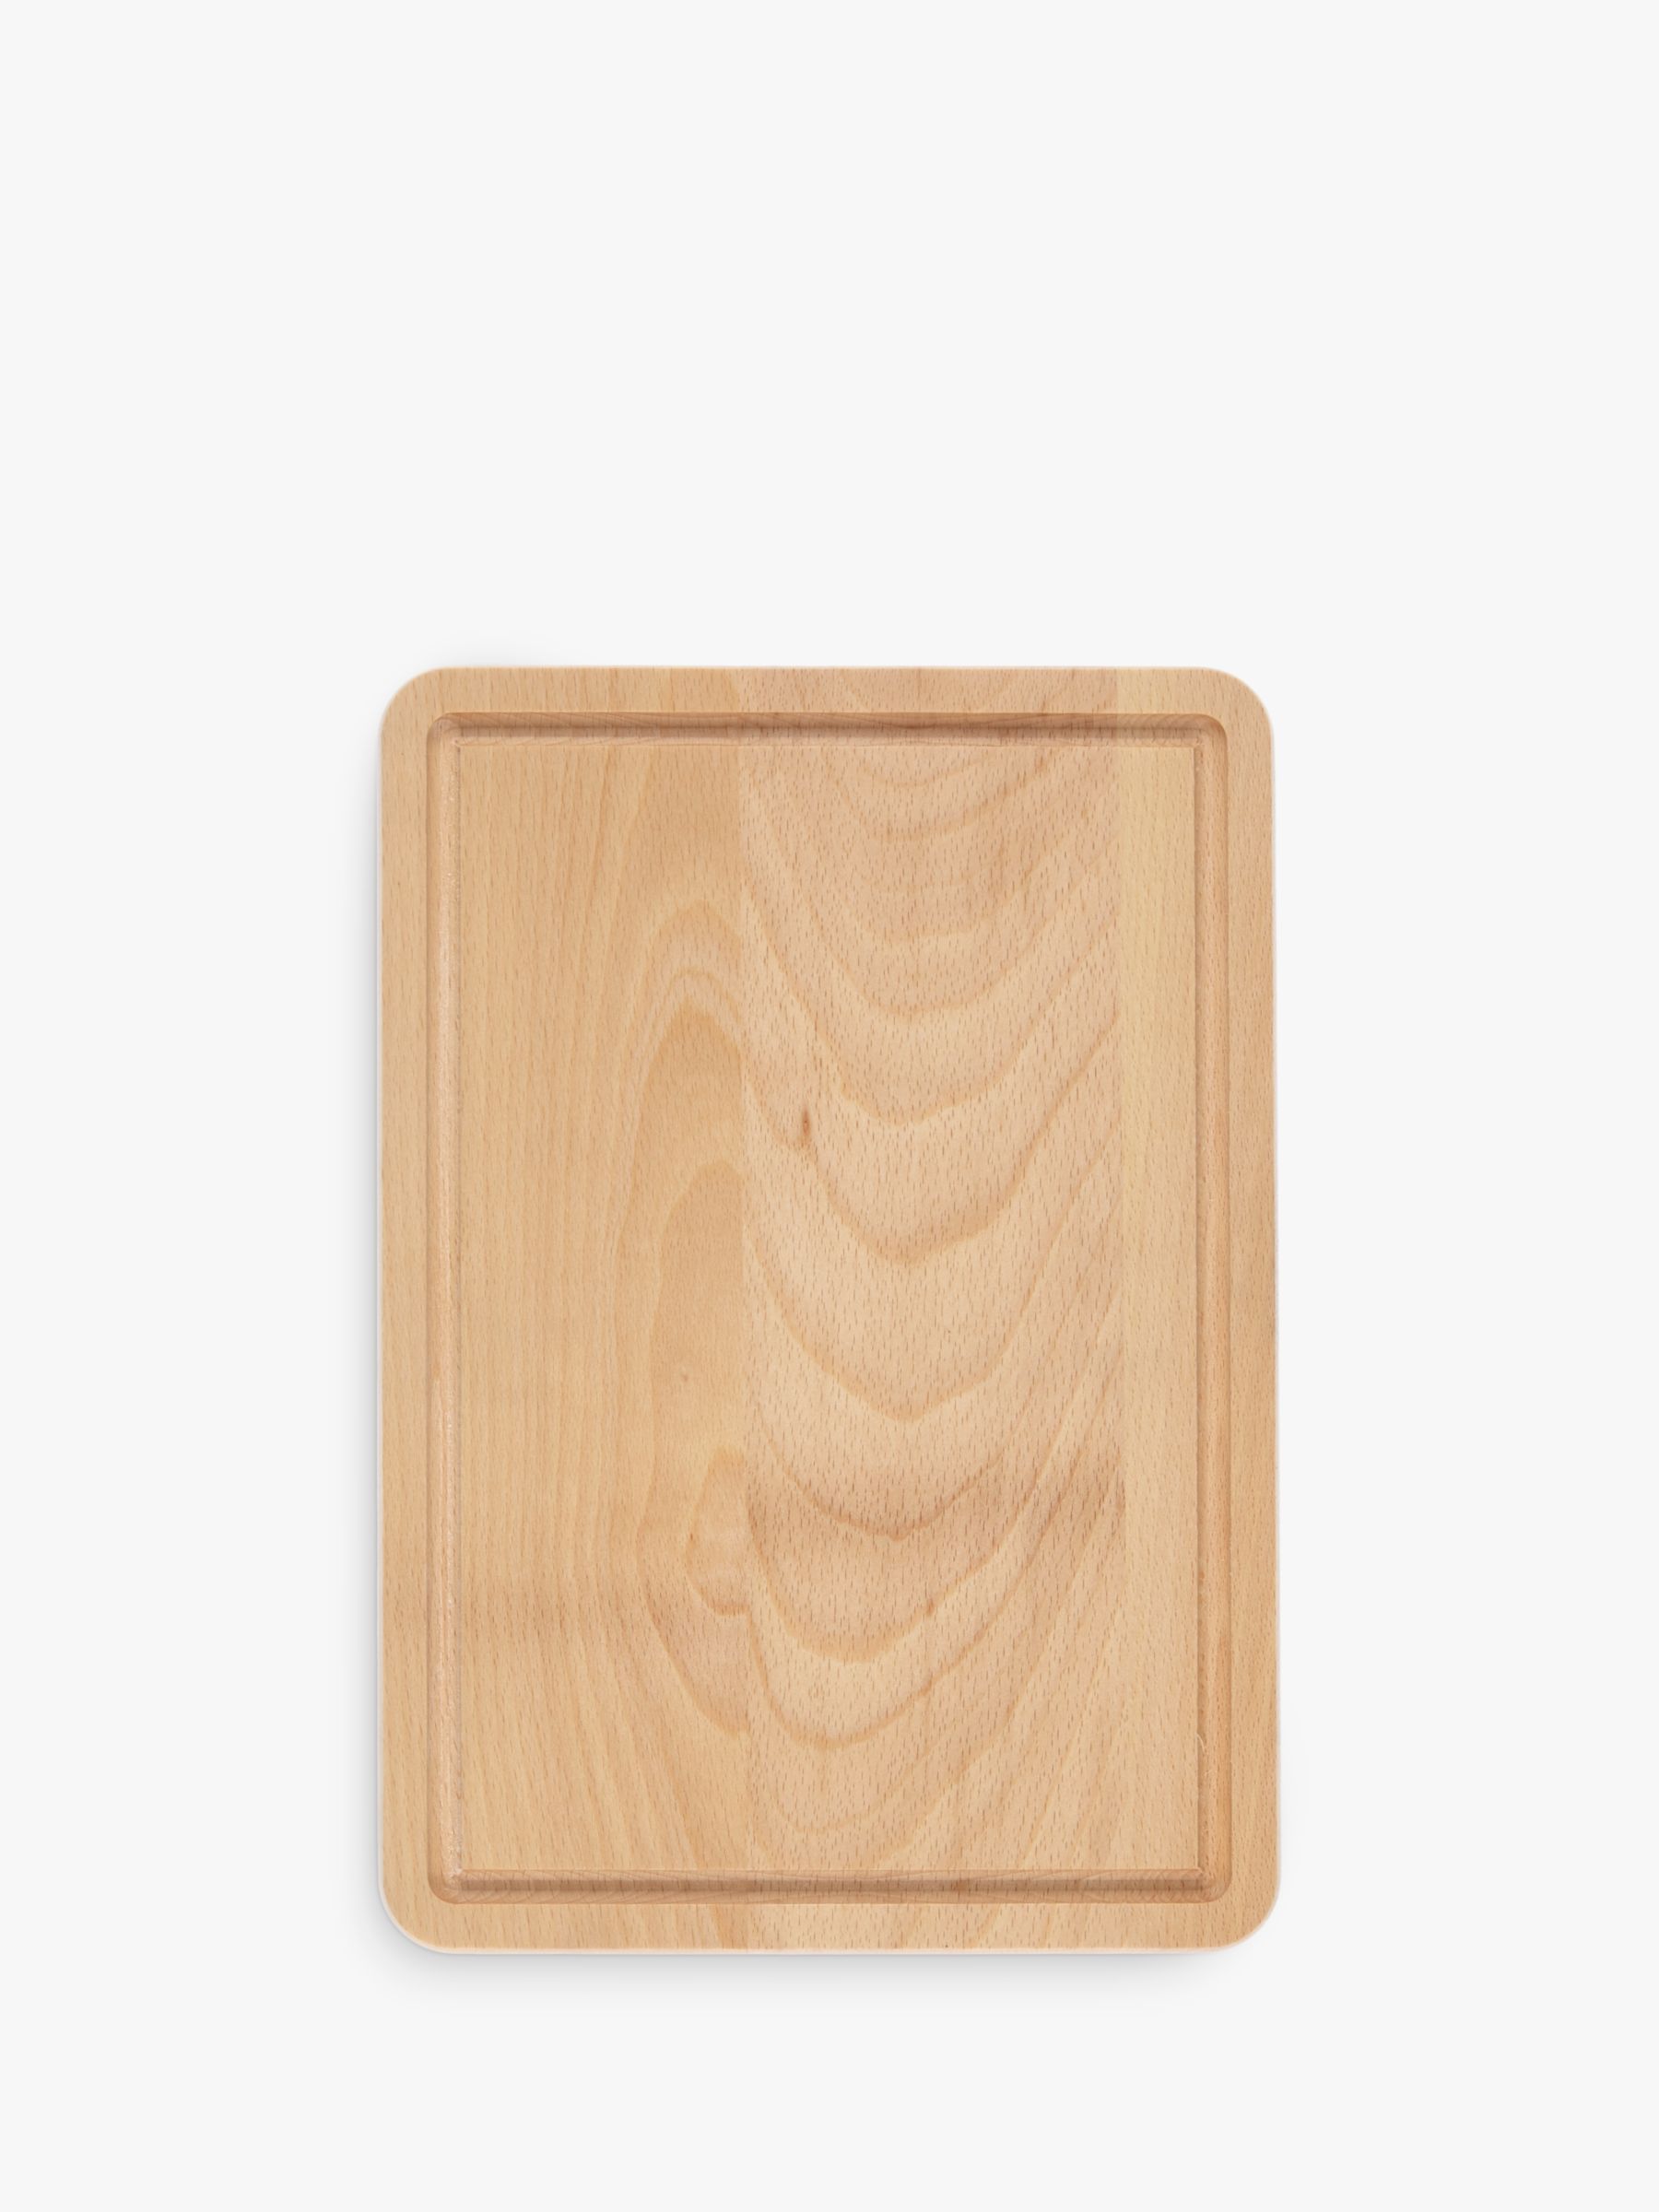 beech wood chopping board